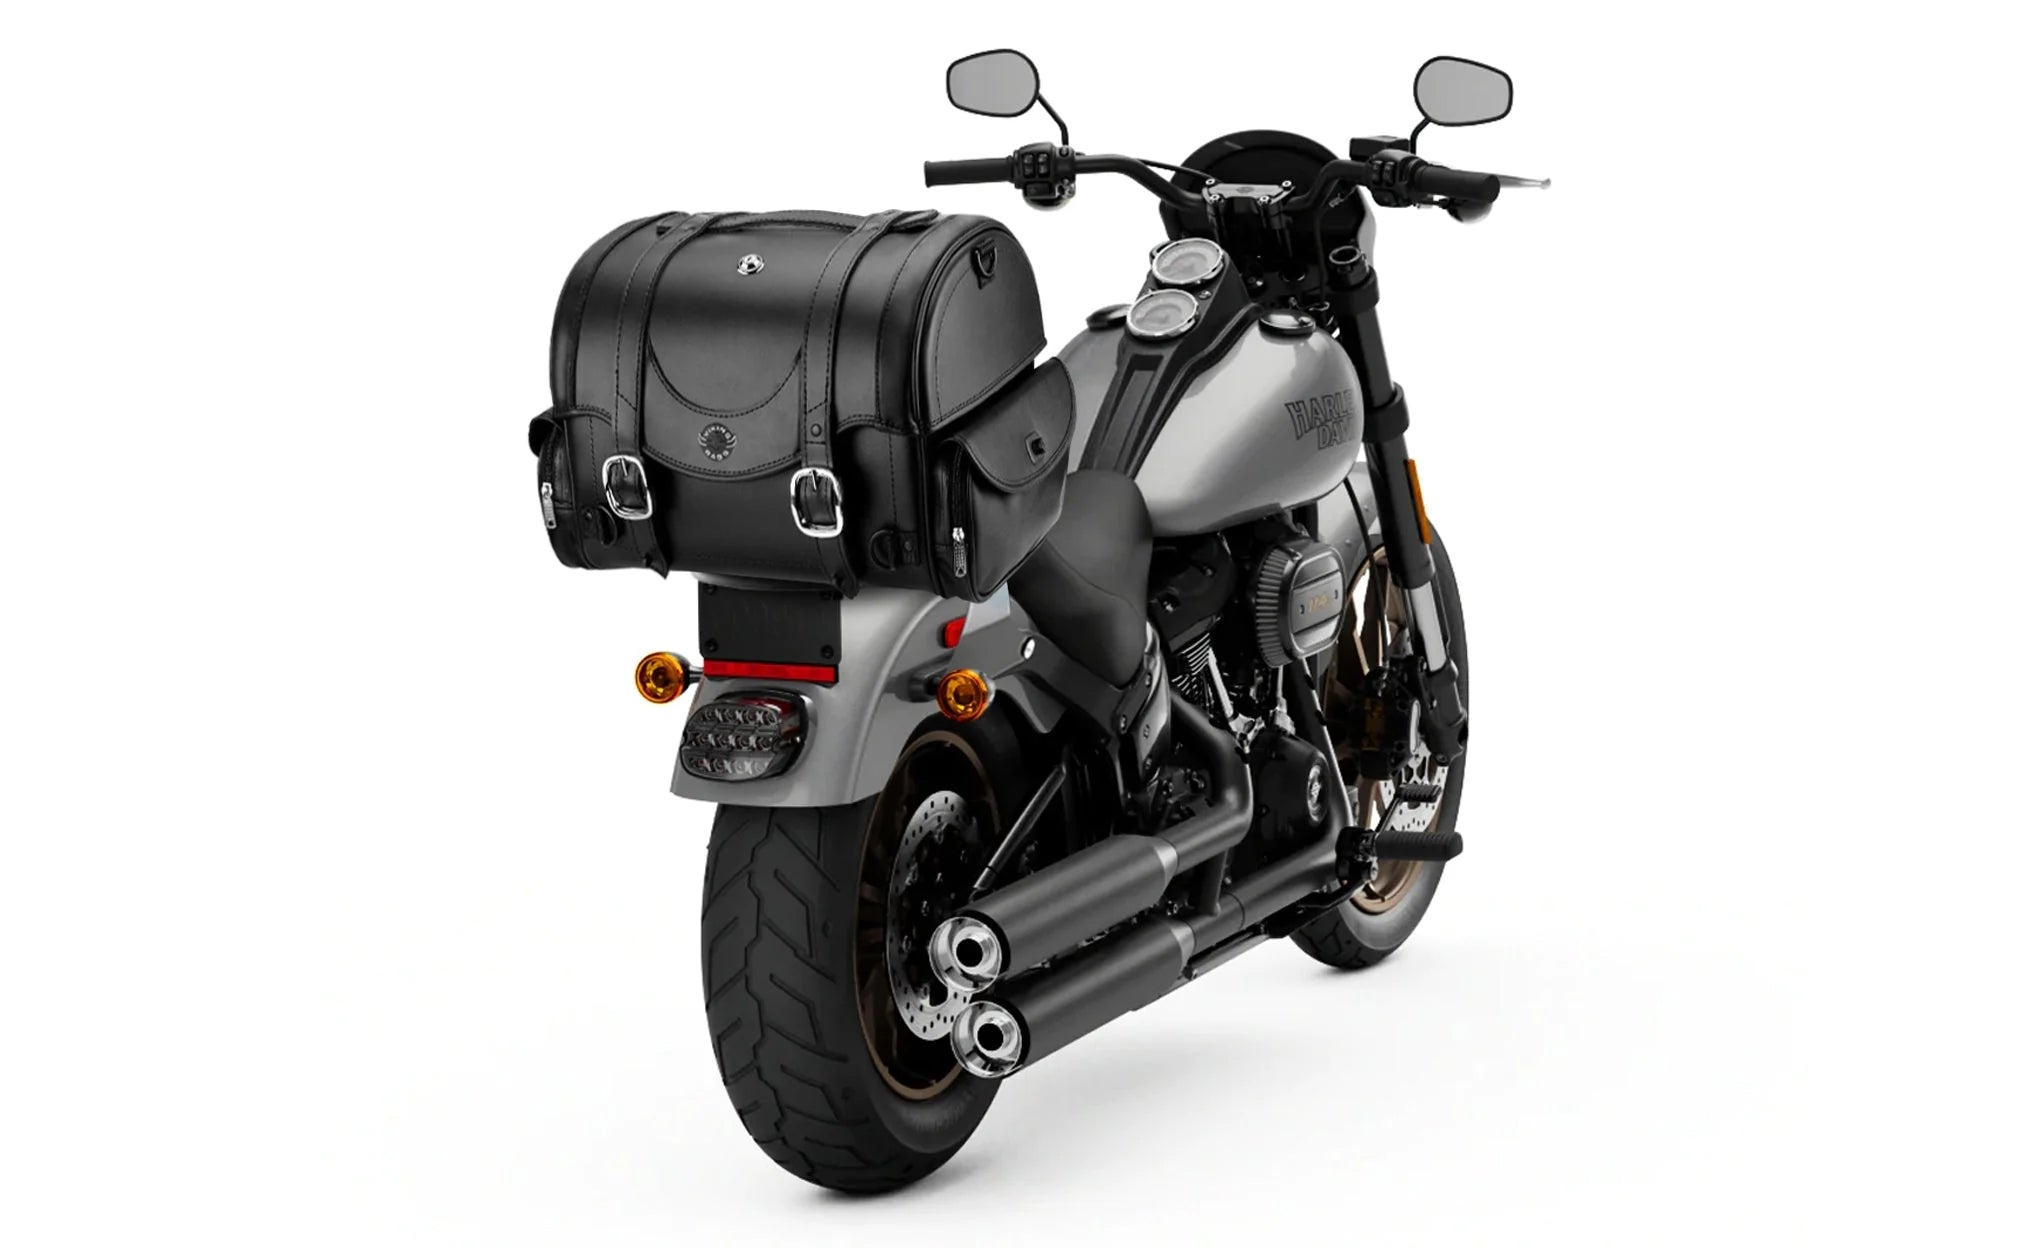 21L - Century Medium Honda Leather Motorcycle Tail Bag on Bike Photo @expand